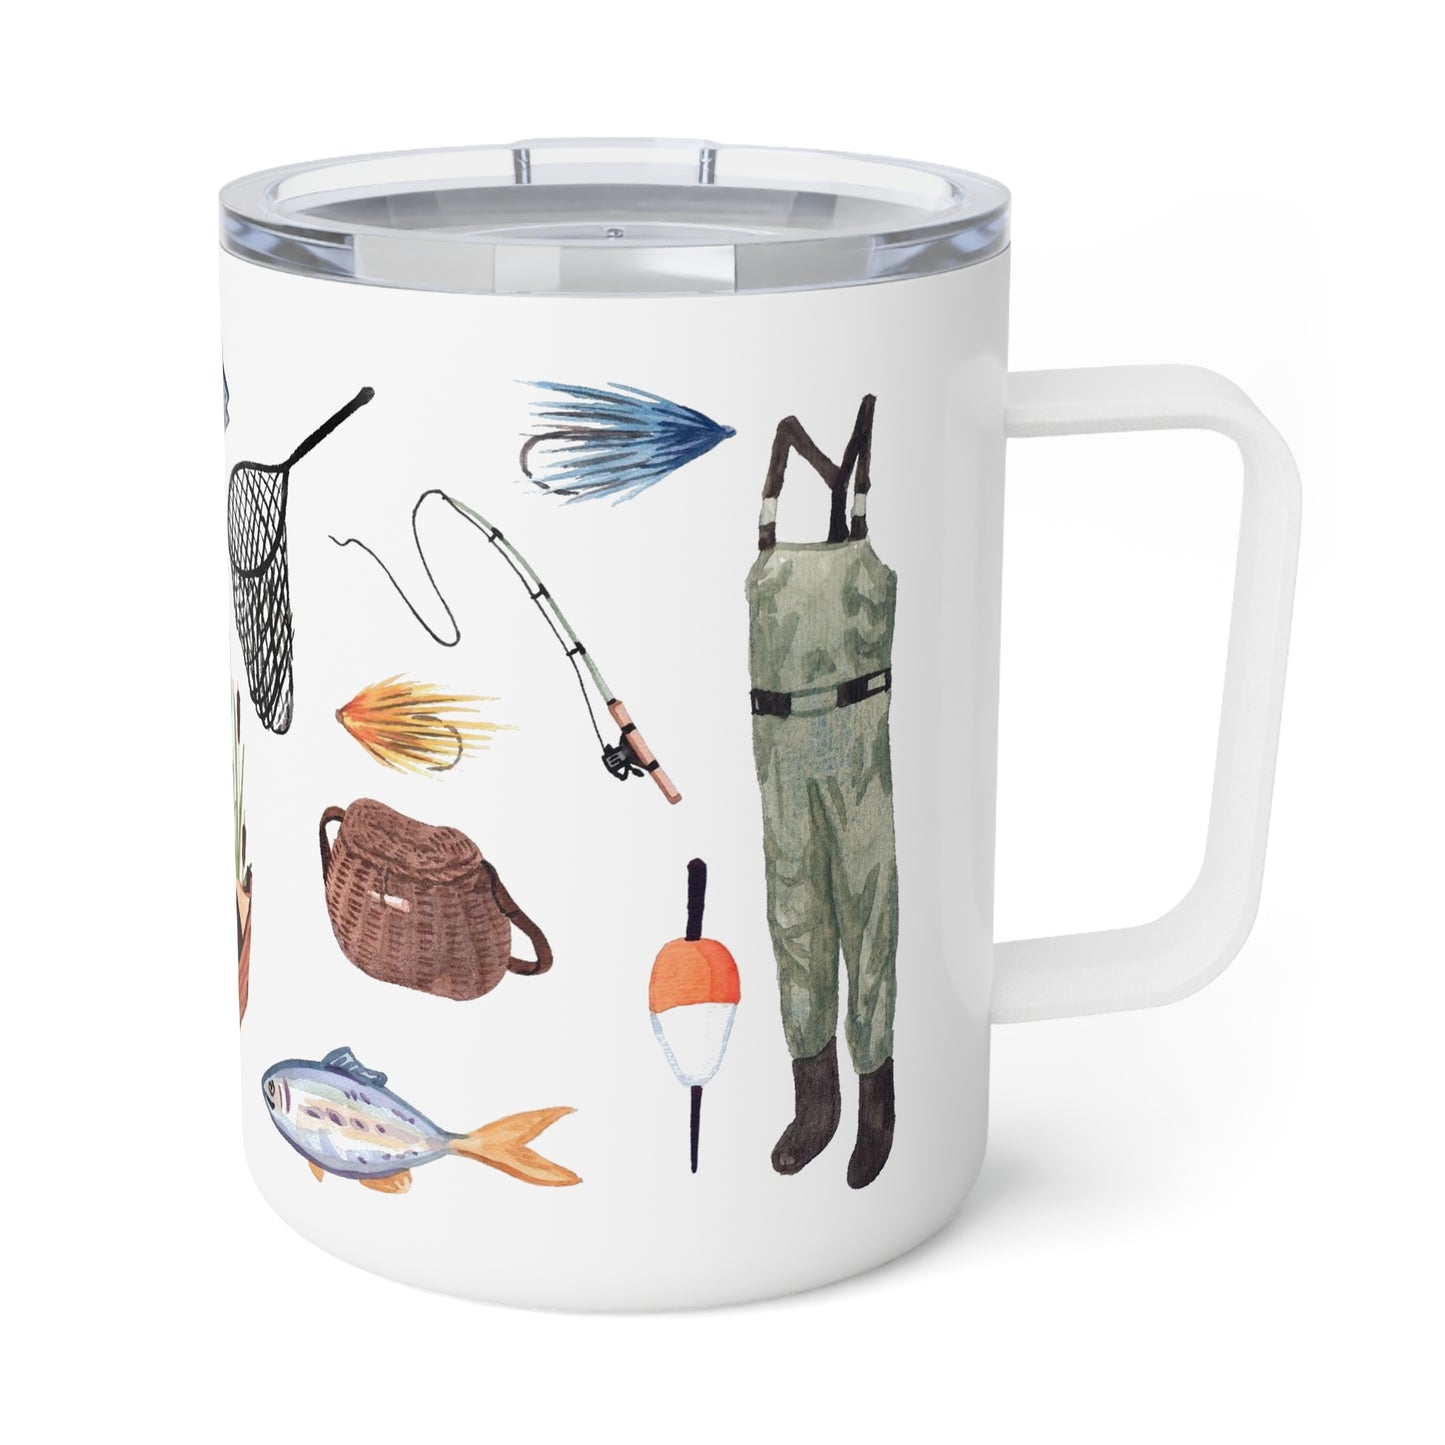 Gone Fishing Insulated Mug With Optional Personalization